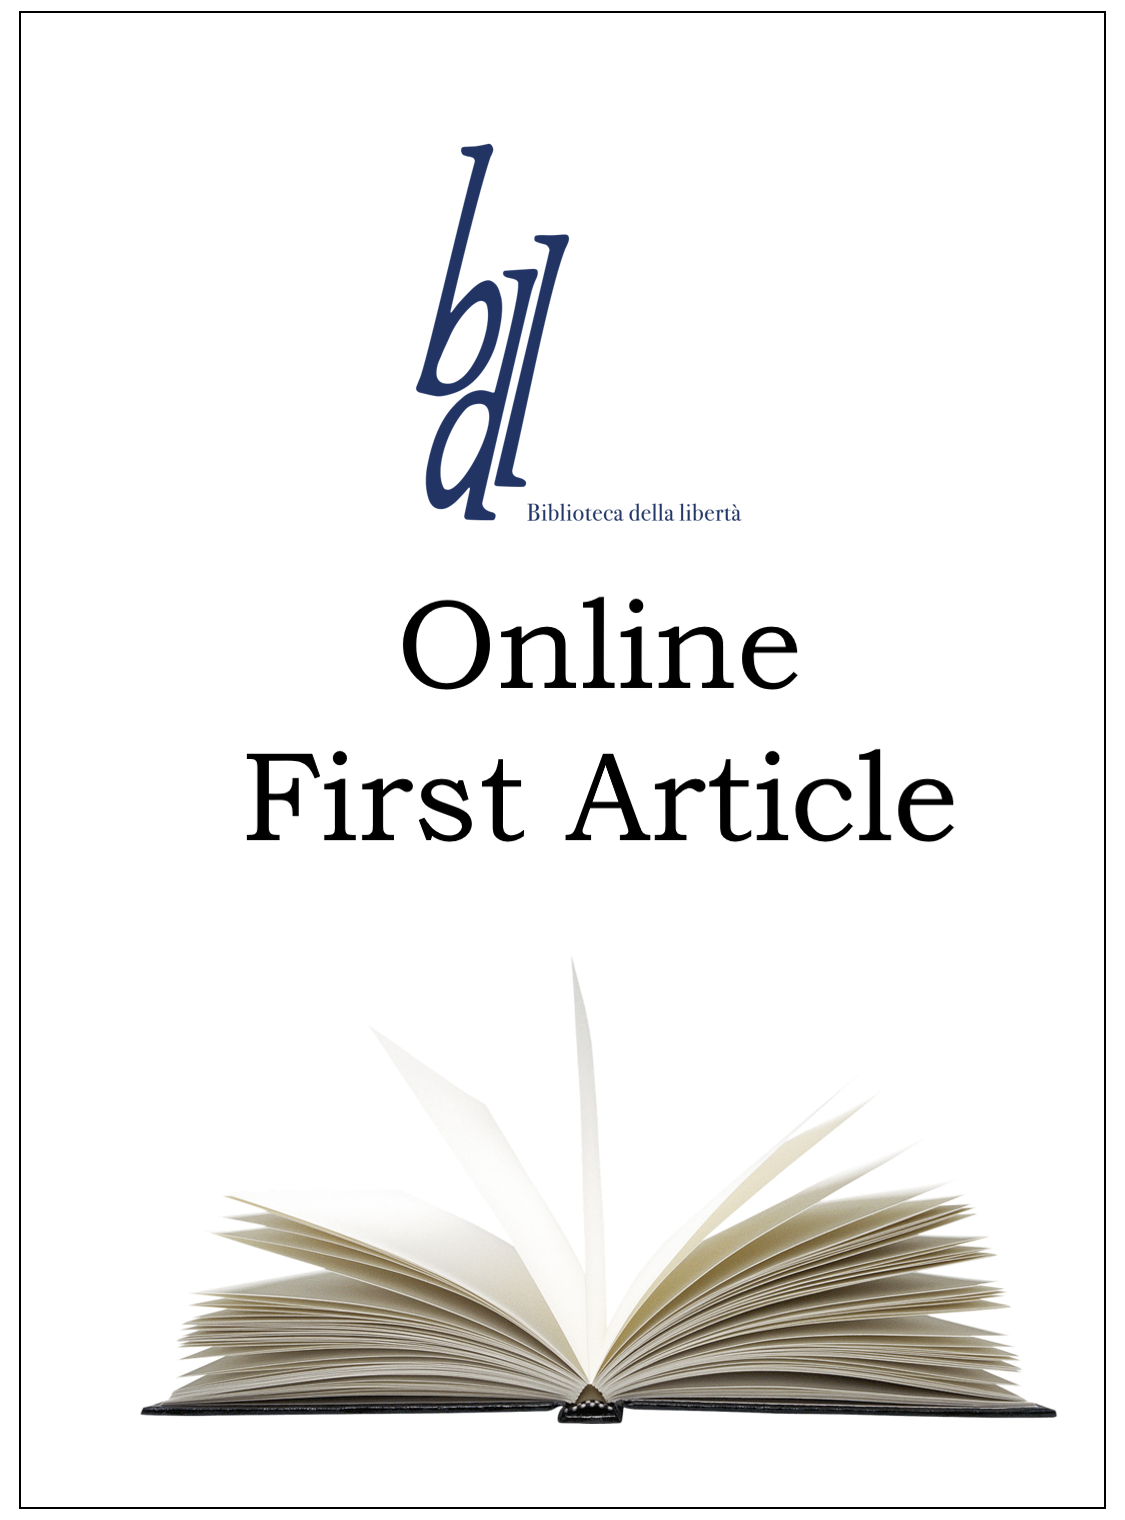 Bdl online first: 2 articles